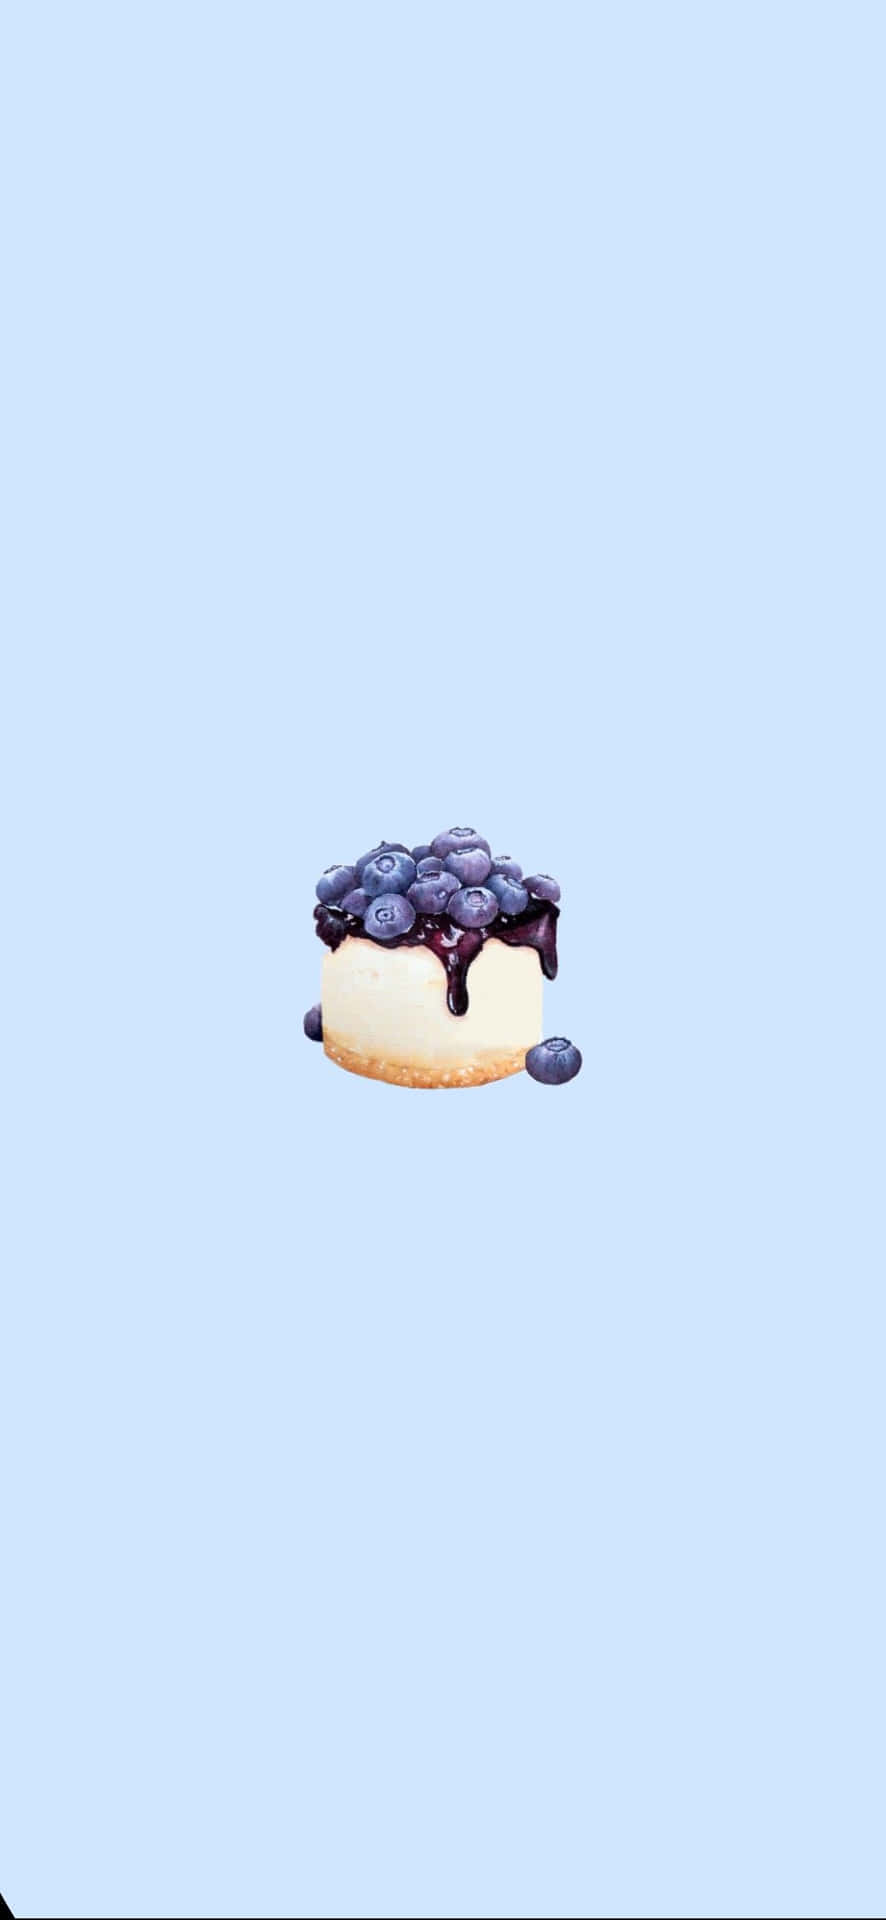 A Blueberry Glazed Cake On A Blue Background Wallpaper